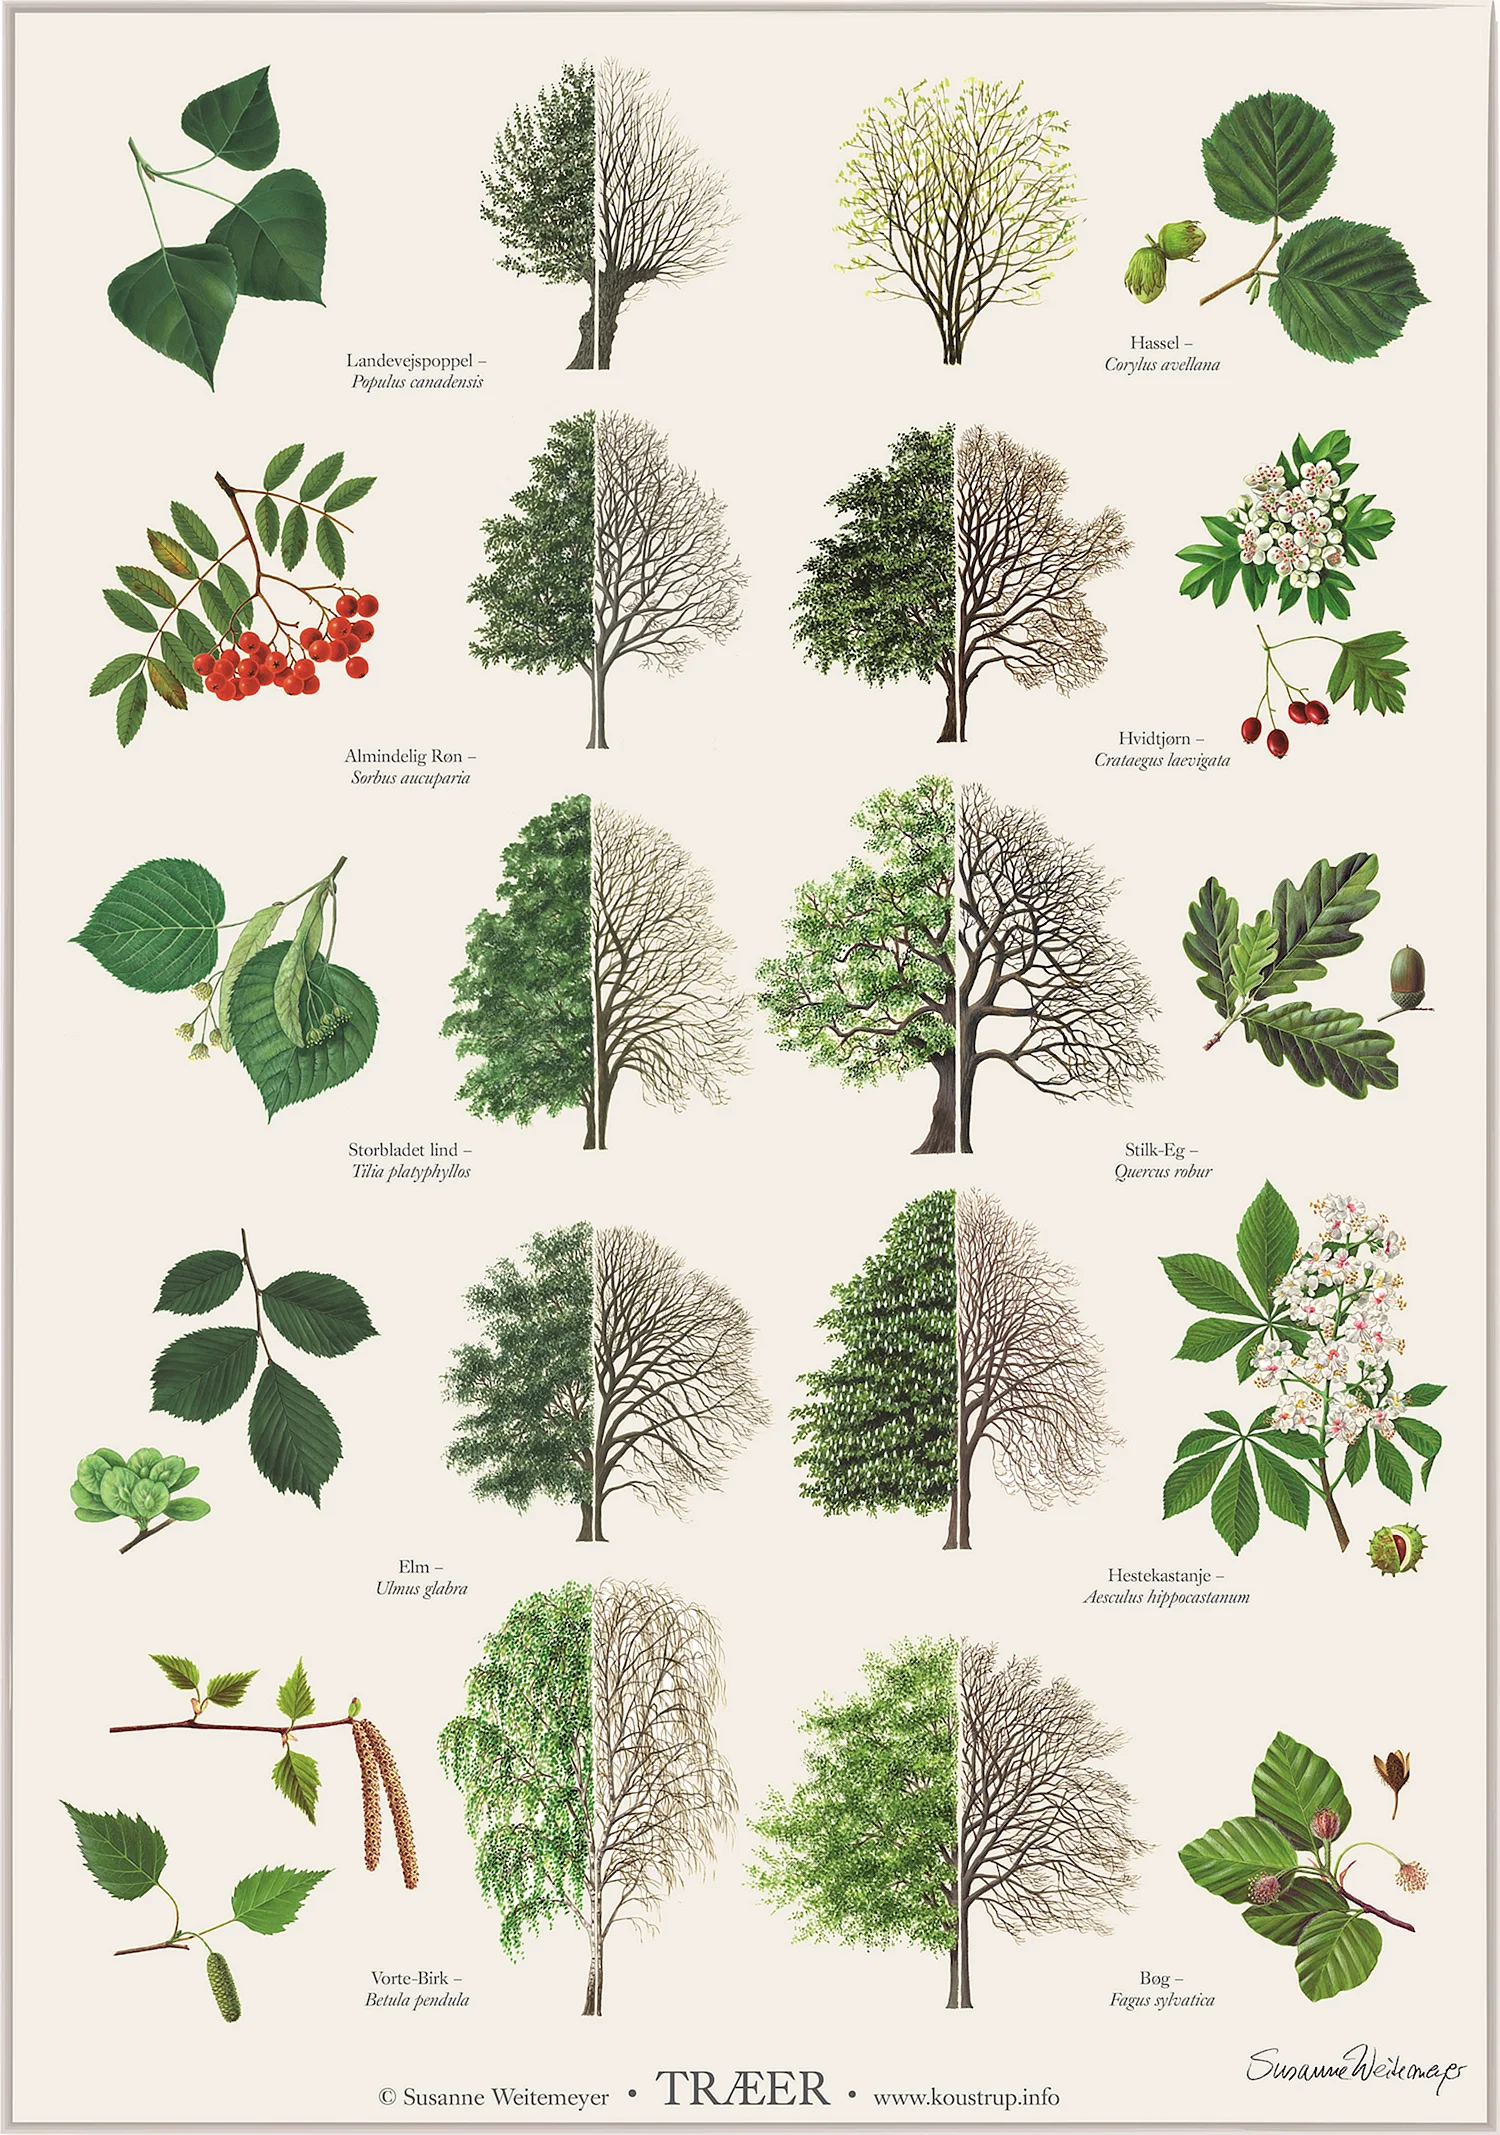 разновидности деревьев фото и названия